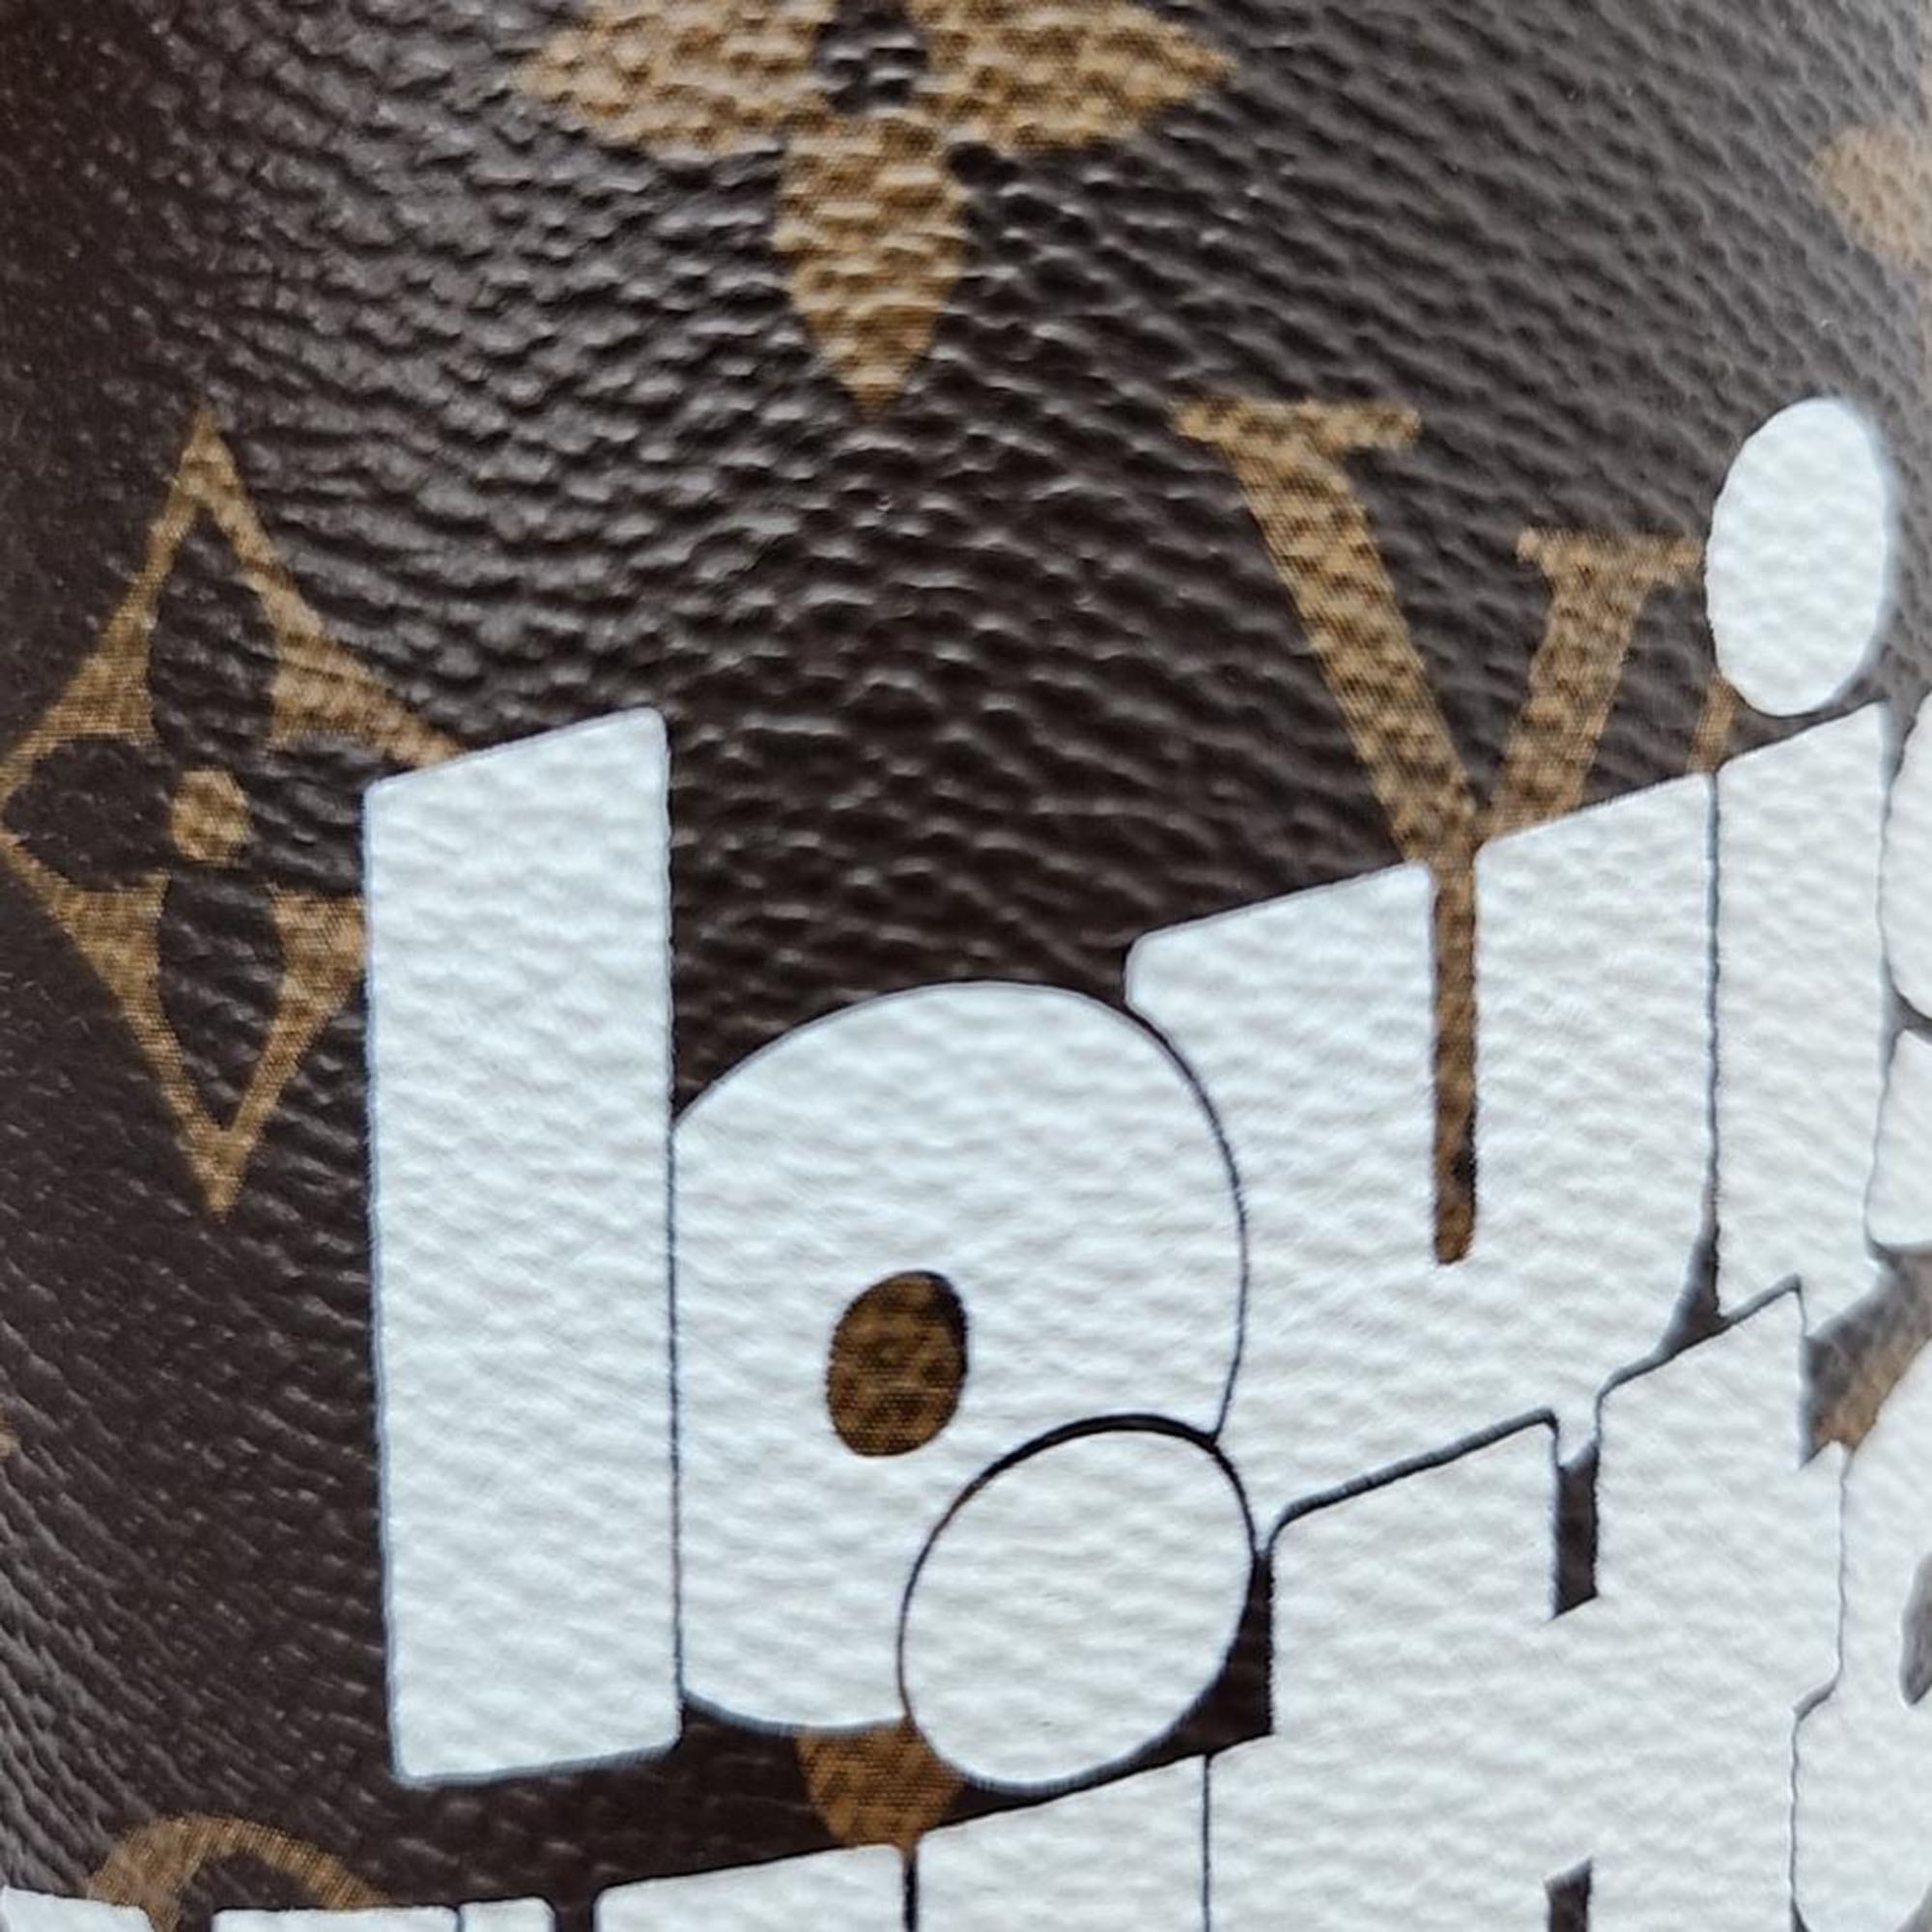 Louis Vuitton Monogram Canvas Brown Coffee Cup